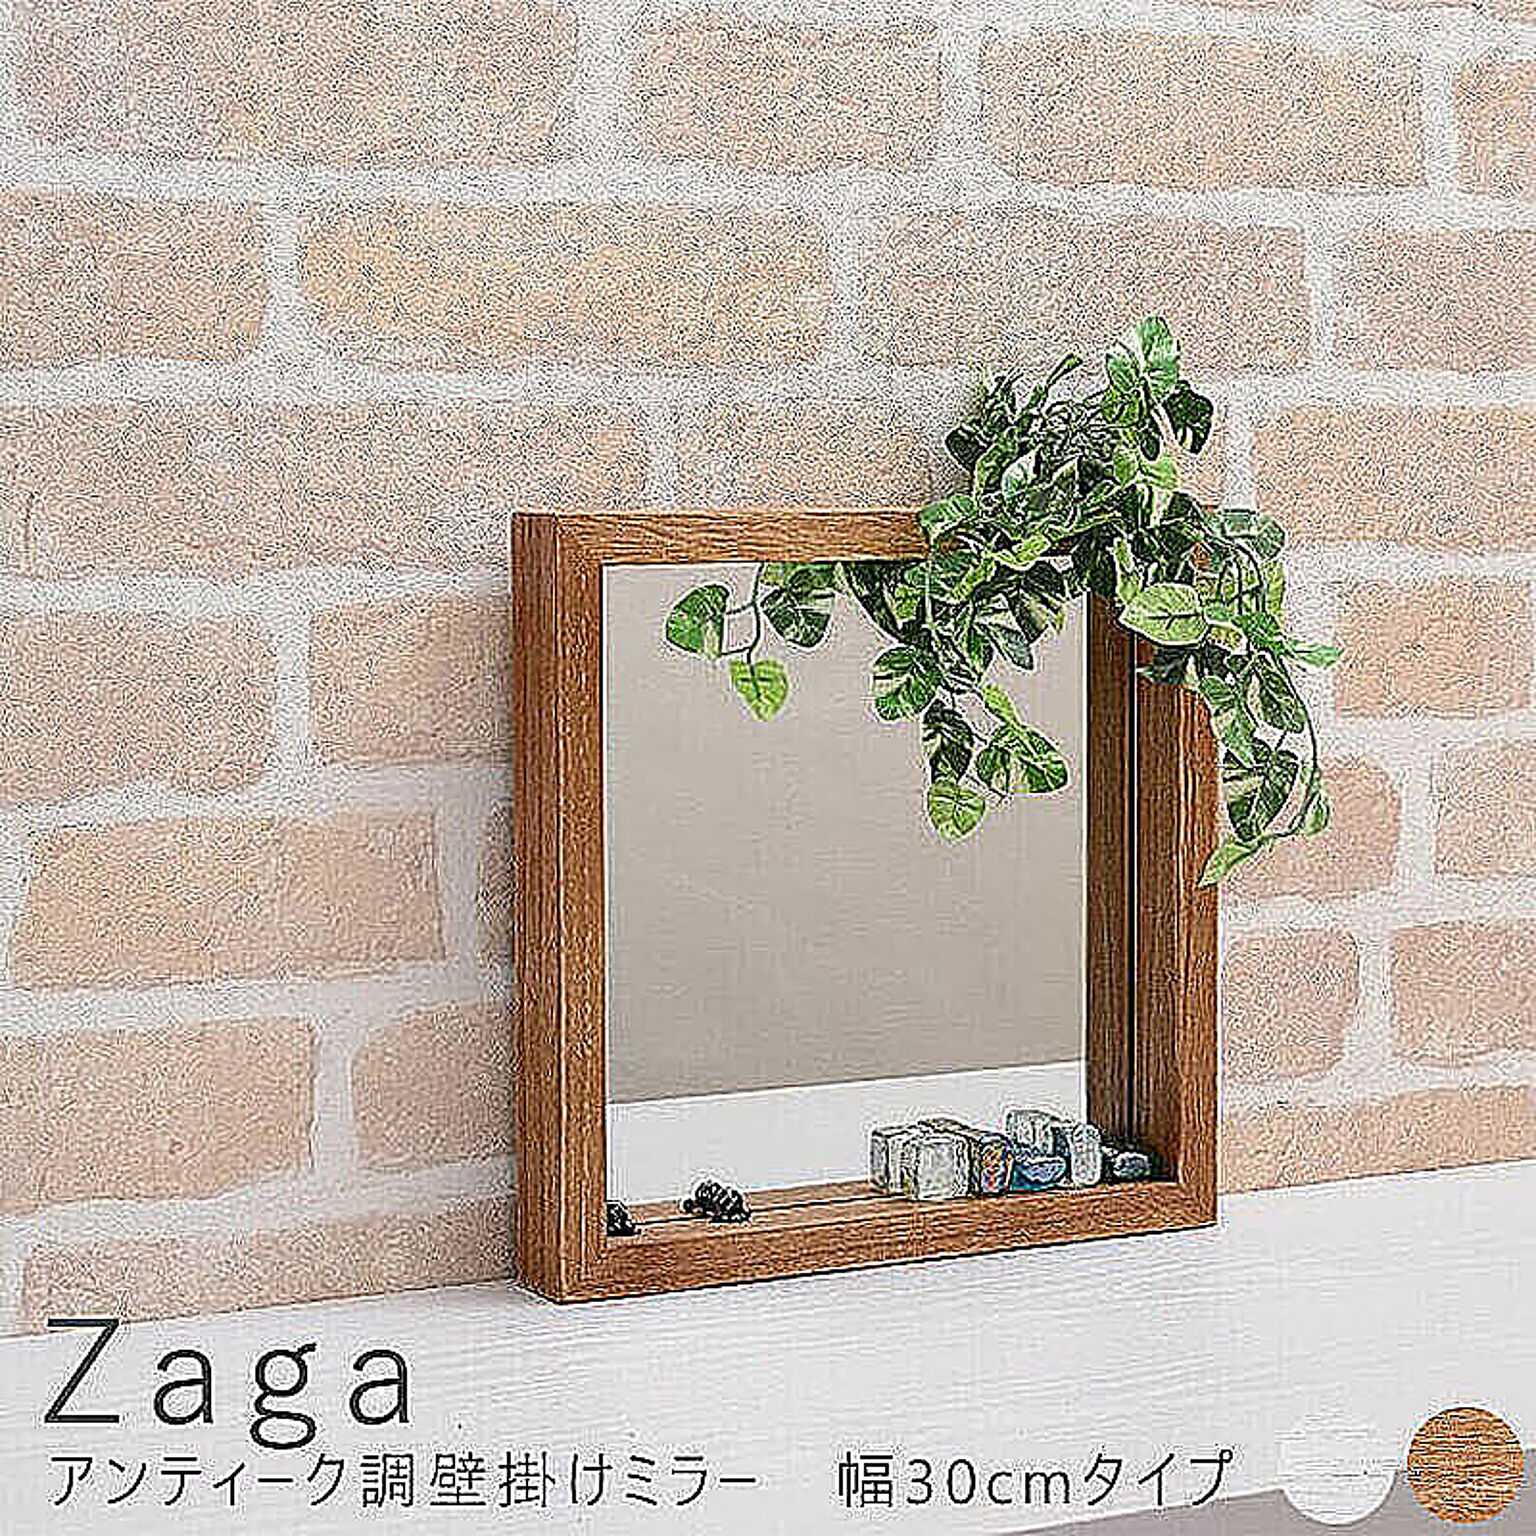 Zaga（ザガ） アンティーク調壁掛けミラー　幅30cmタイプ m00790